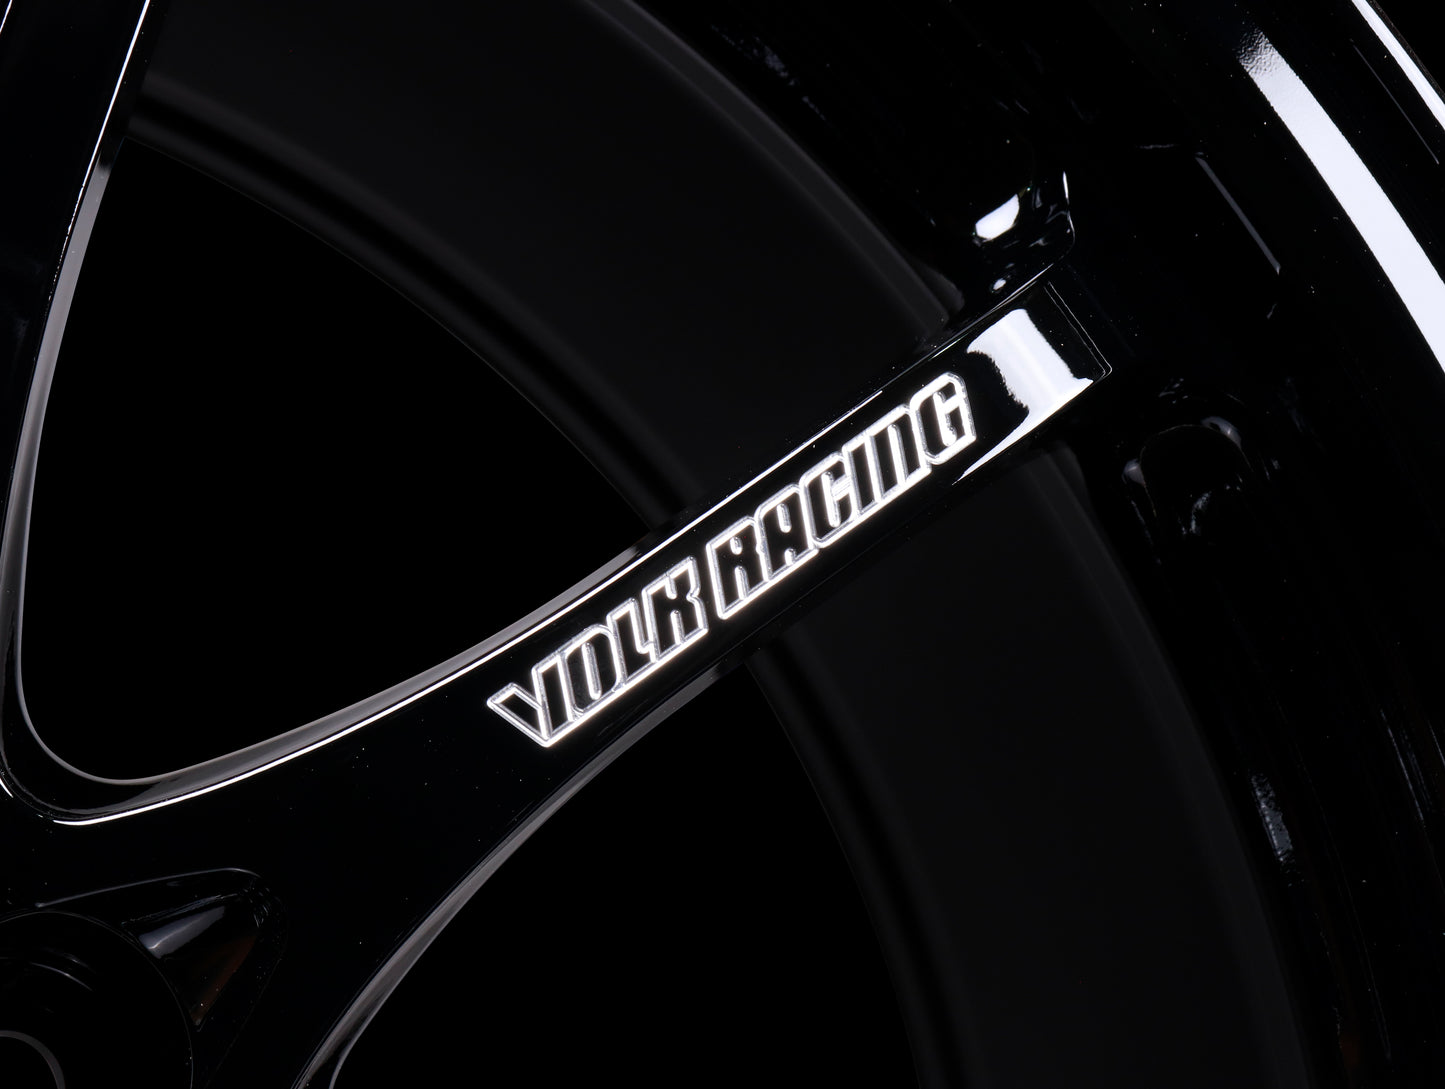 Volk Racing CE28N Plus Wheels - Gloss Black - 18x9.5 / +38